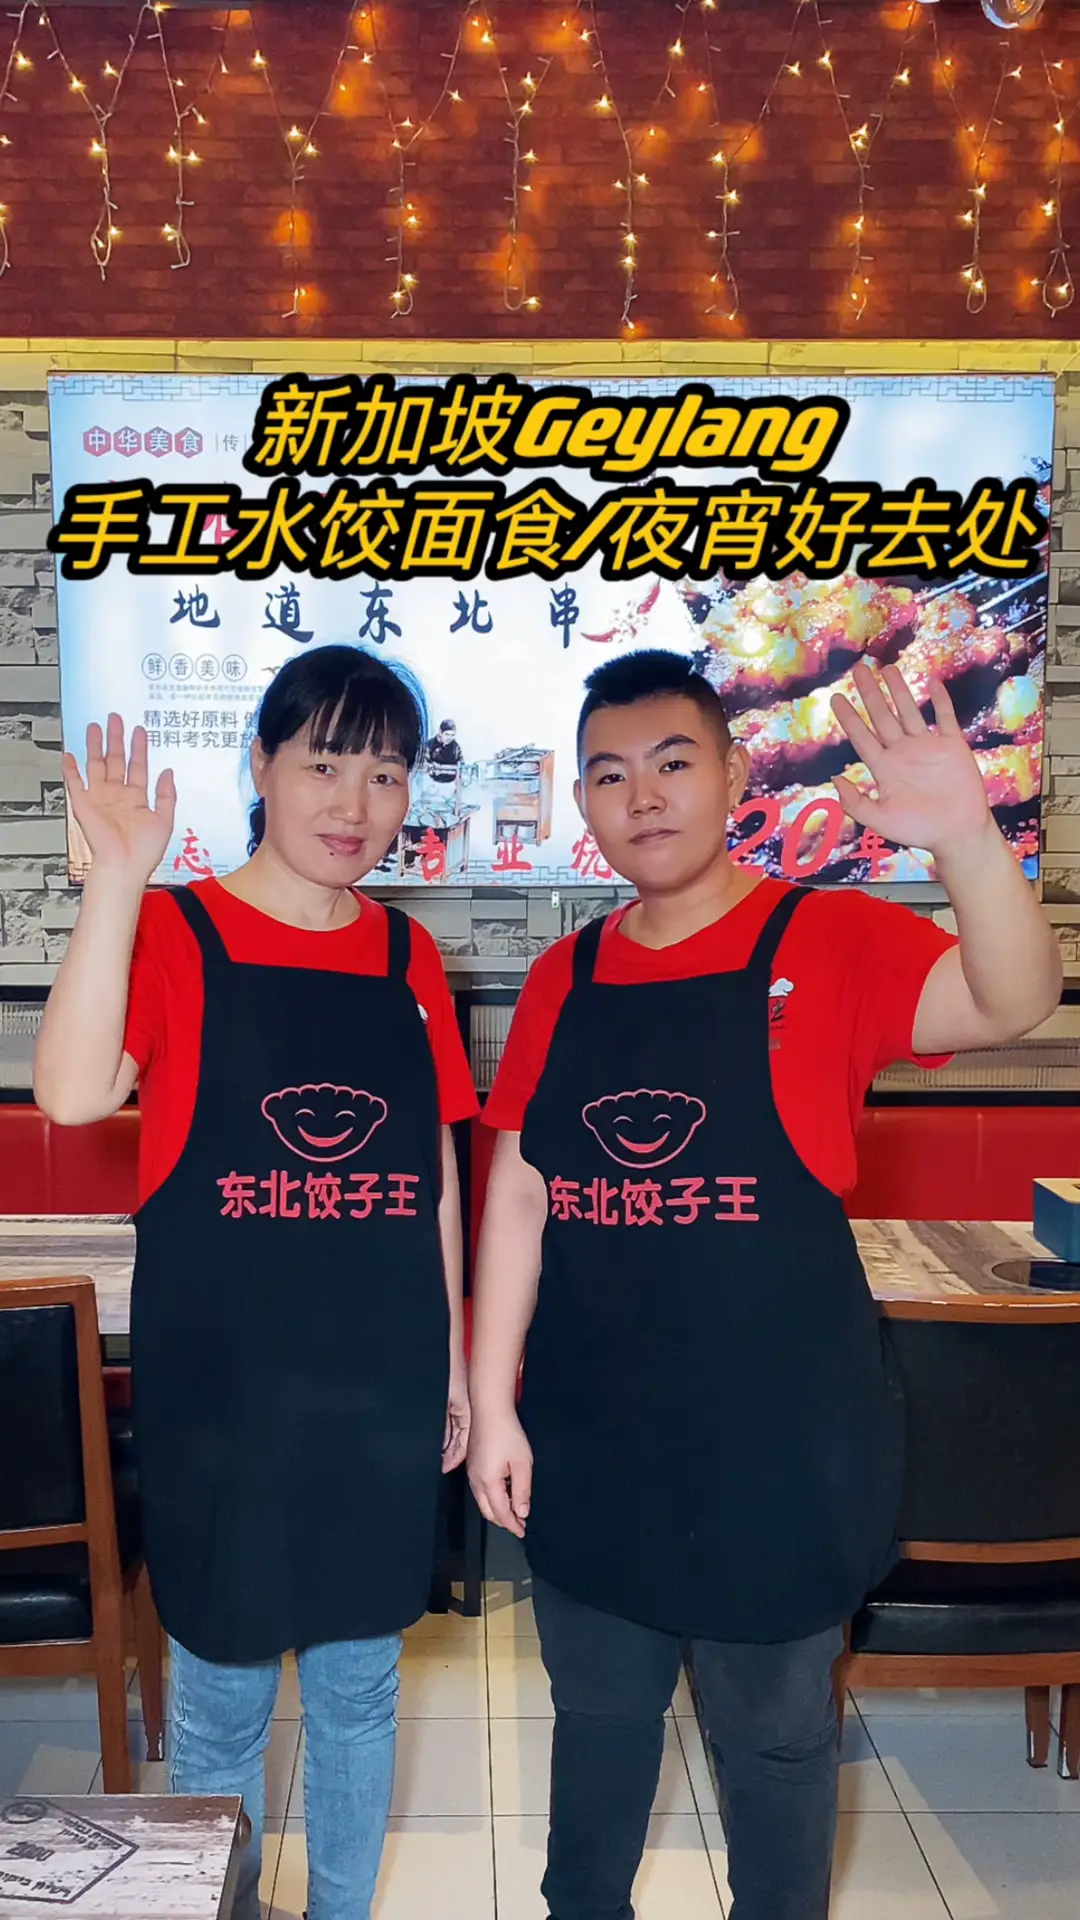 Singapore Chinese skewers and handmade dumplings's images